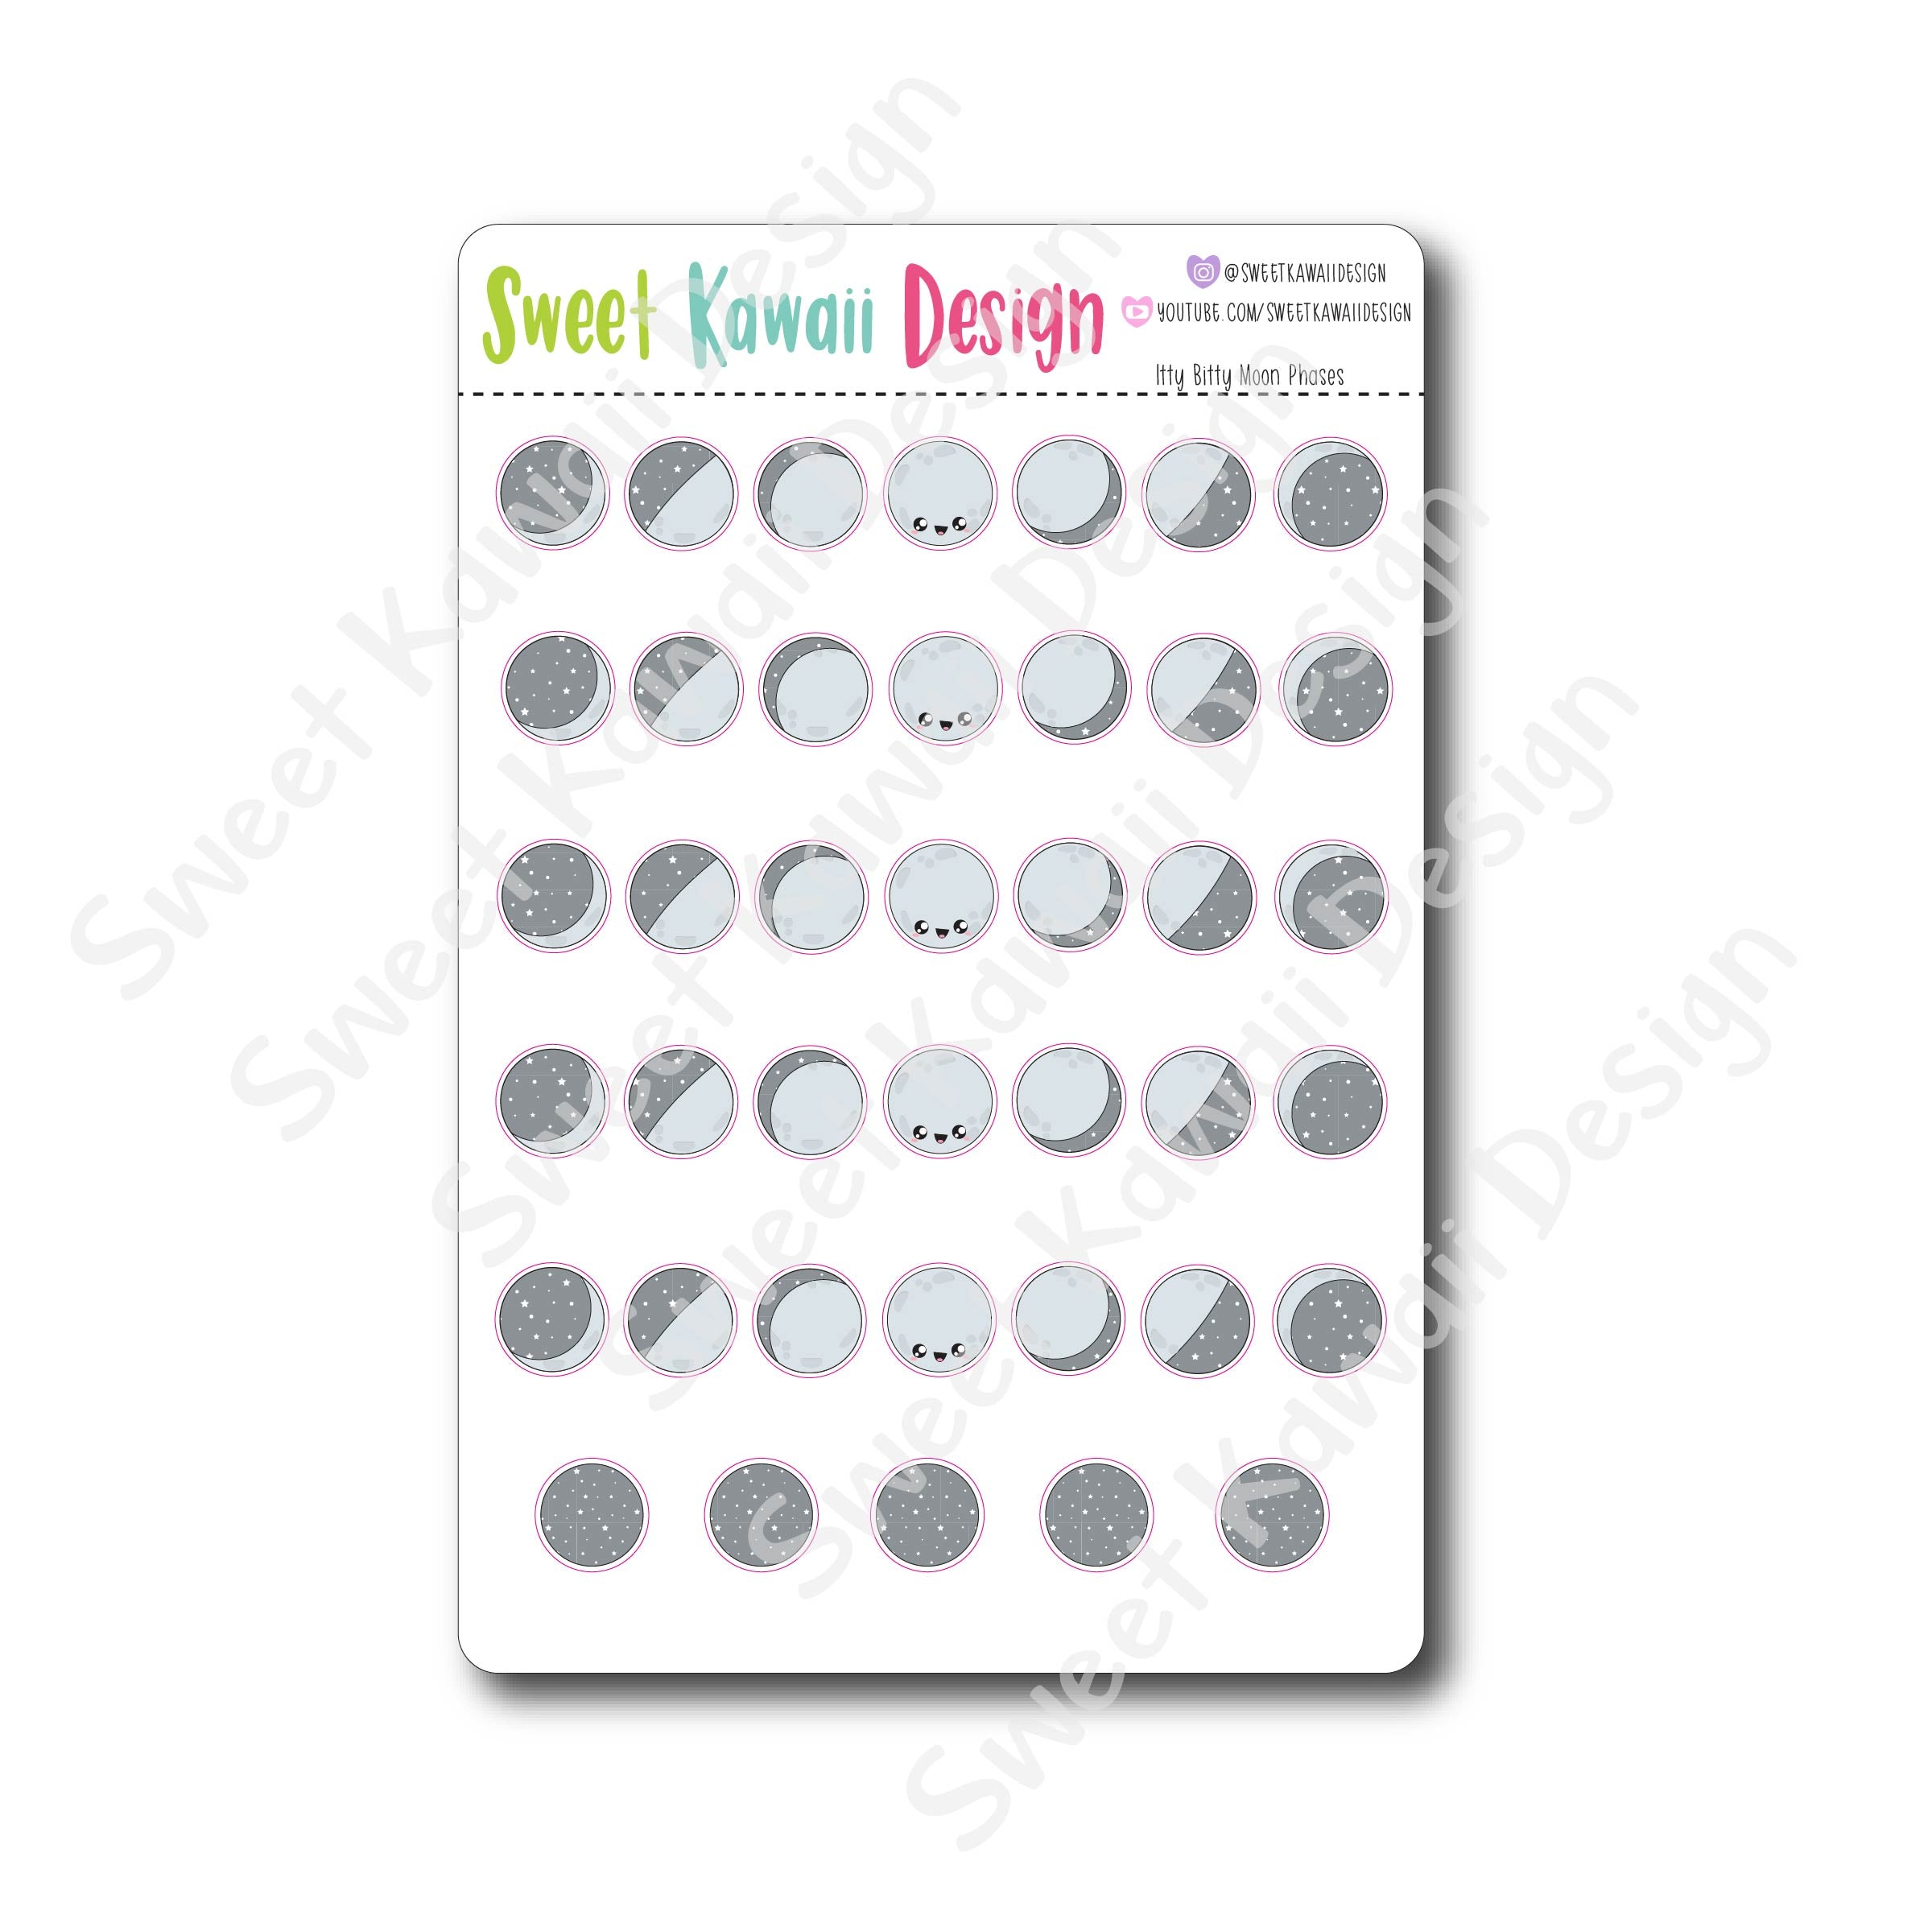 Kawaii Moon Phase Stickers